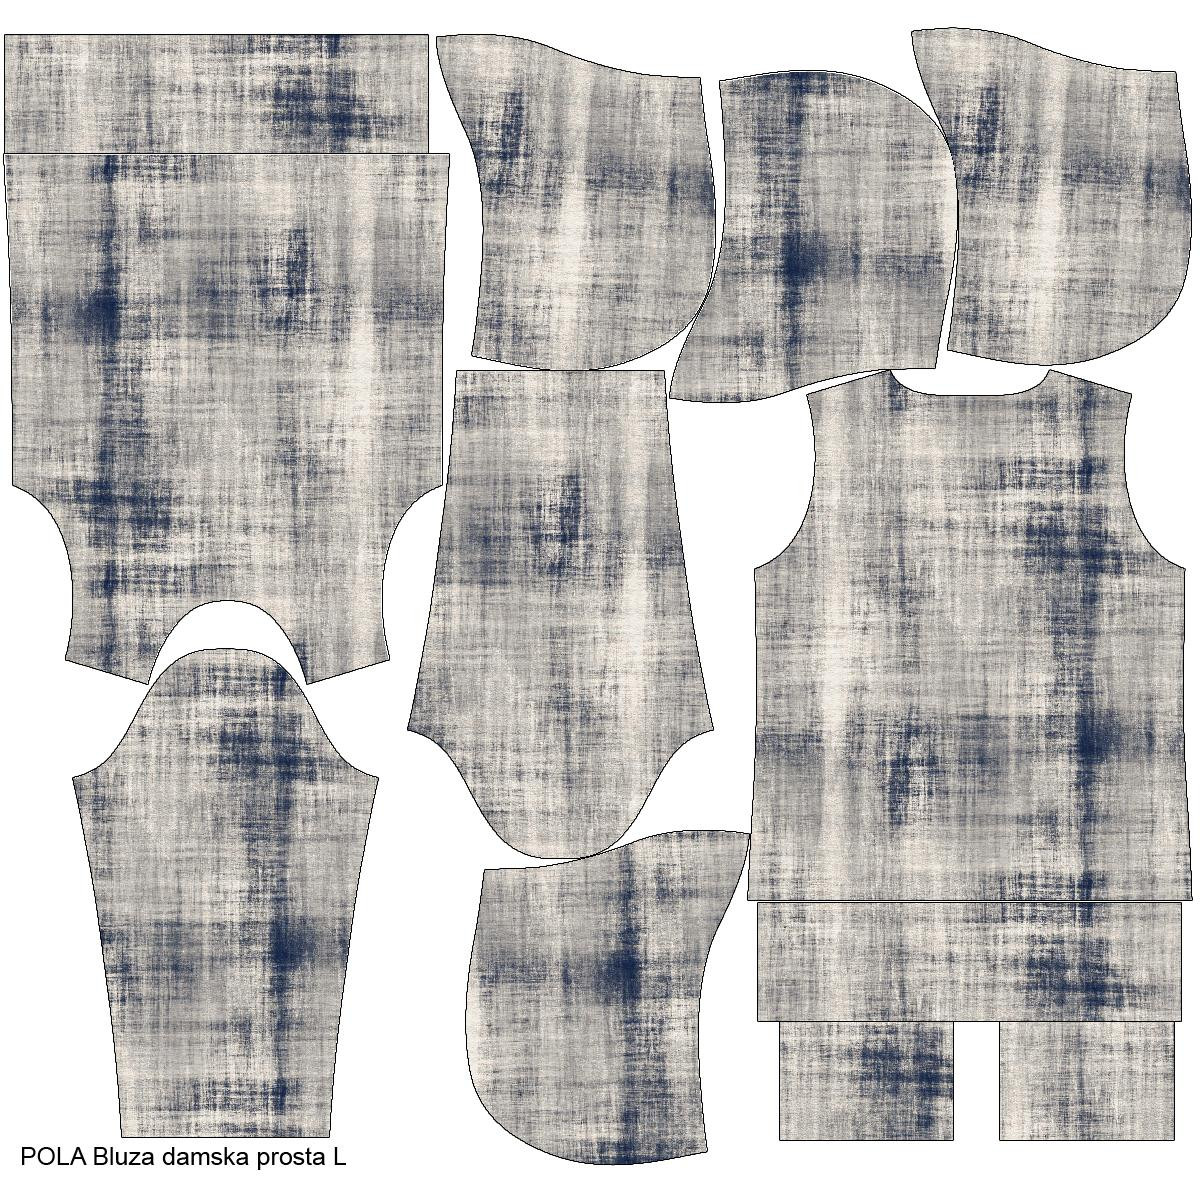 CLASSIC WOMEN’S HOODIE (POLA) - ACID WASH PAT. 2 (navy) - looped knit fabric 